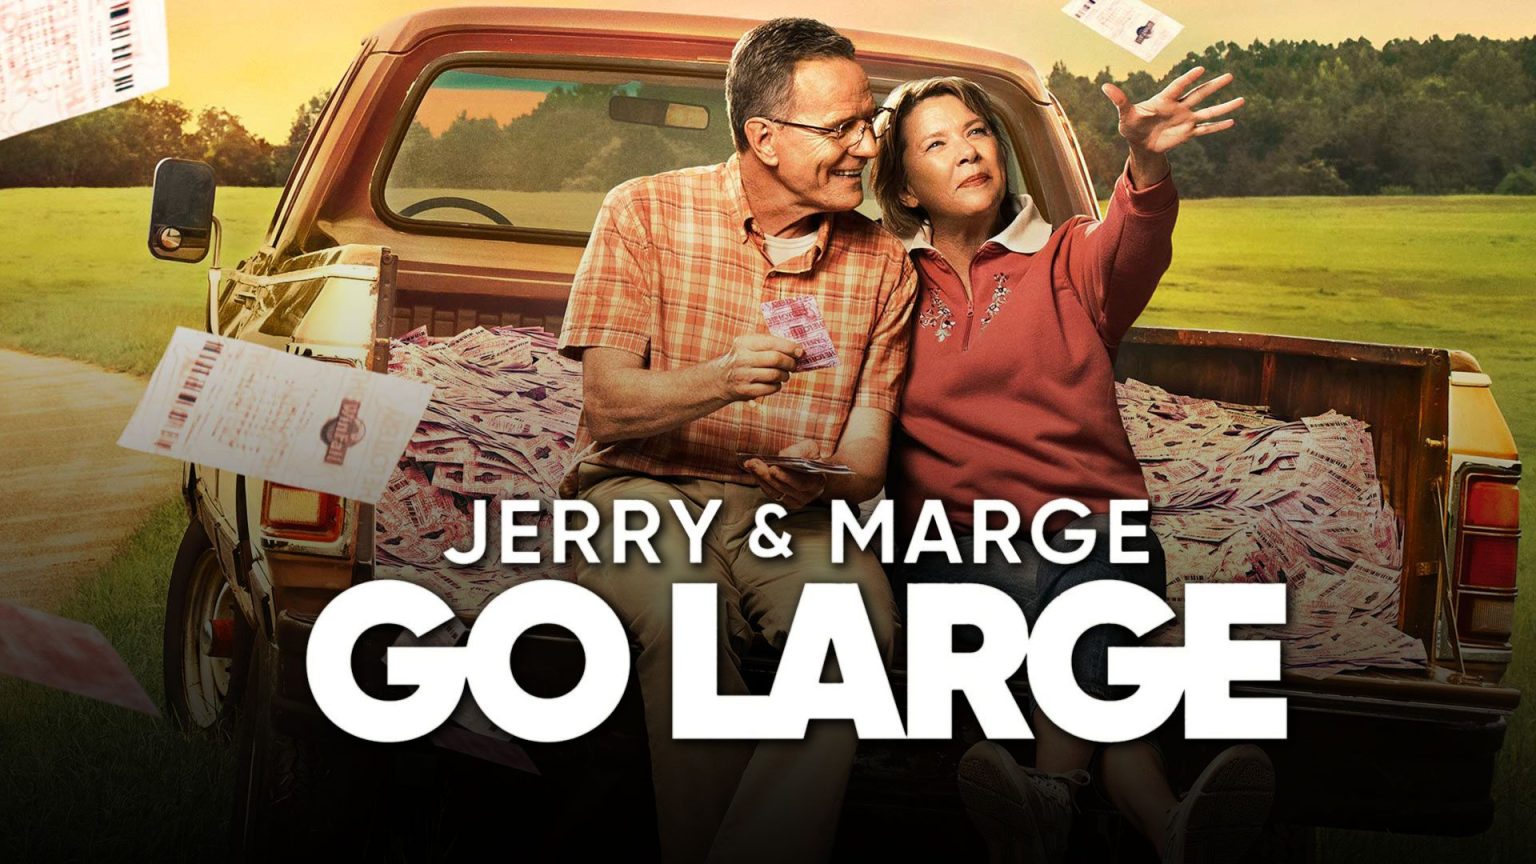 Jerry & Marge Go Large